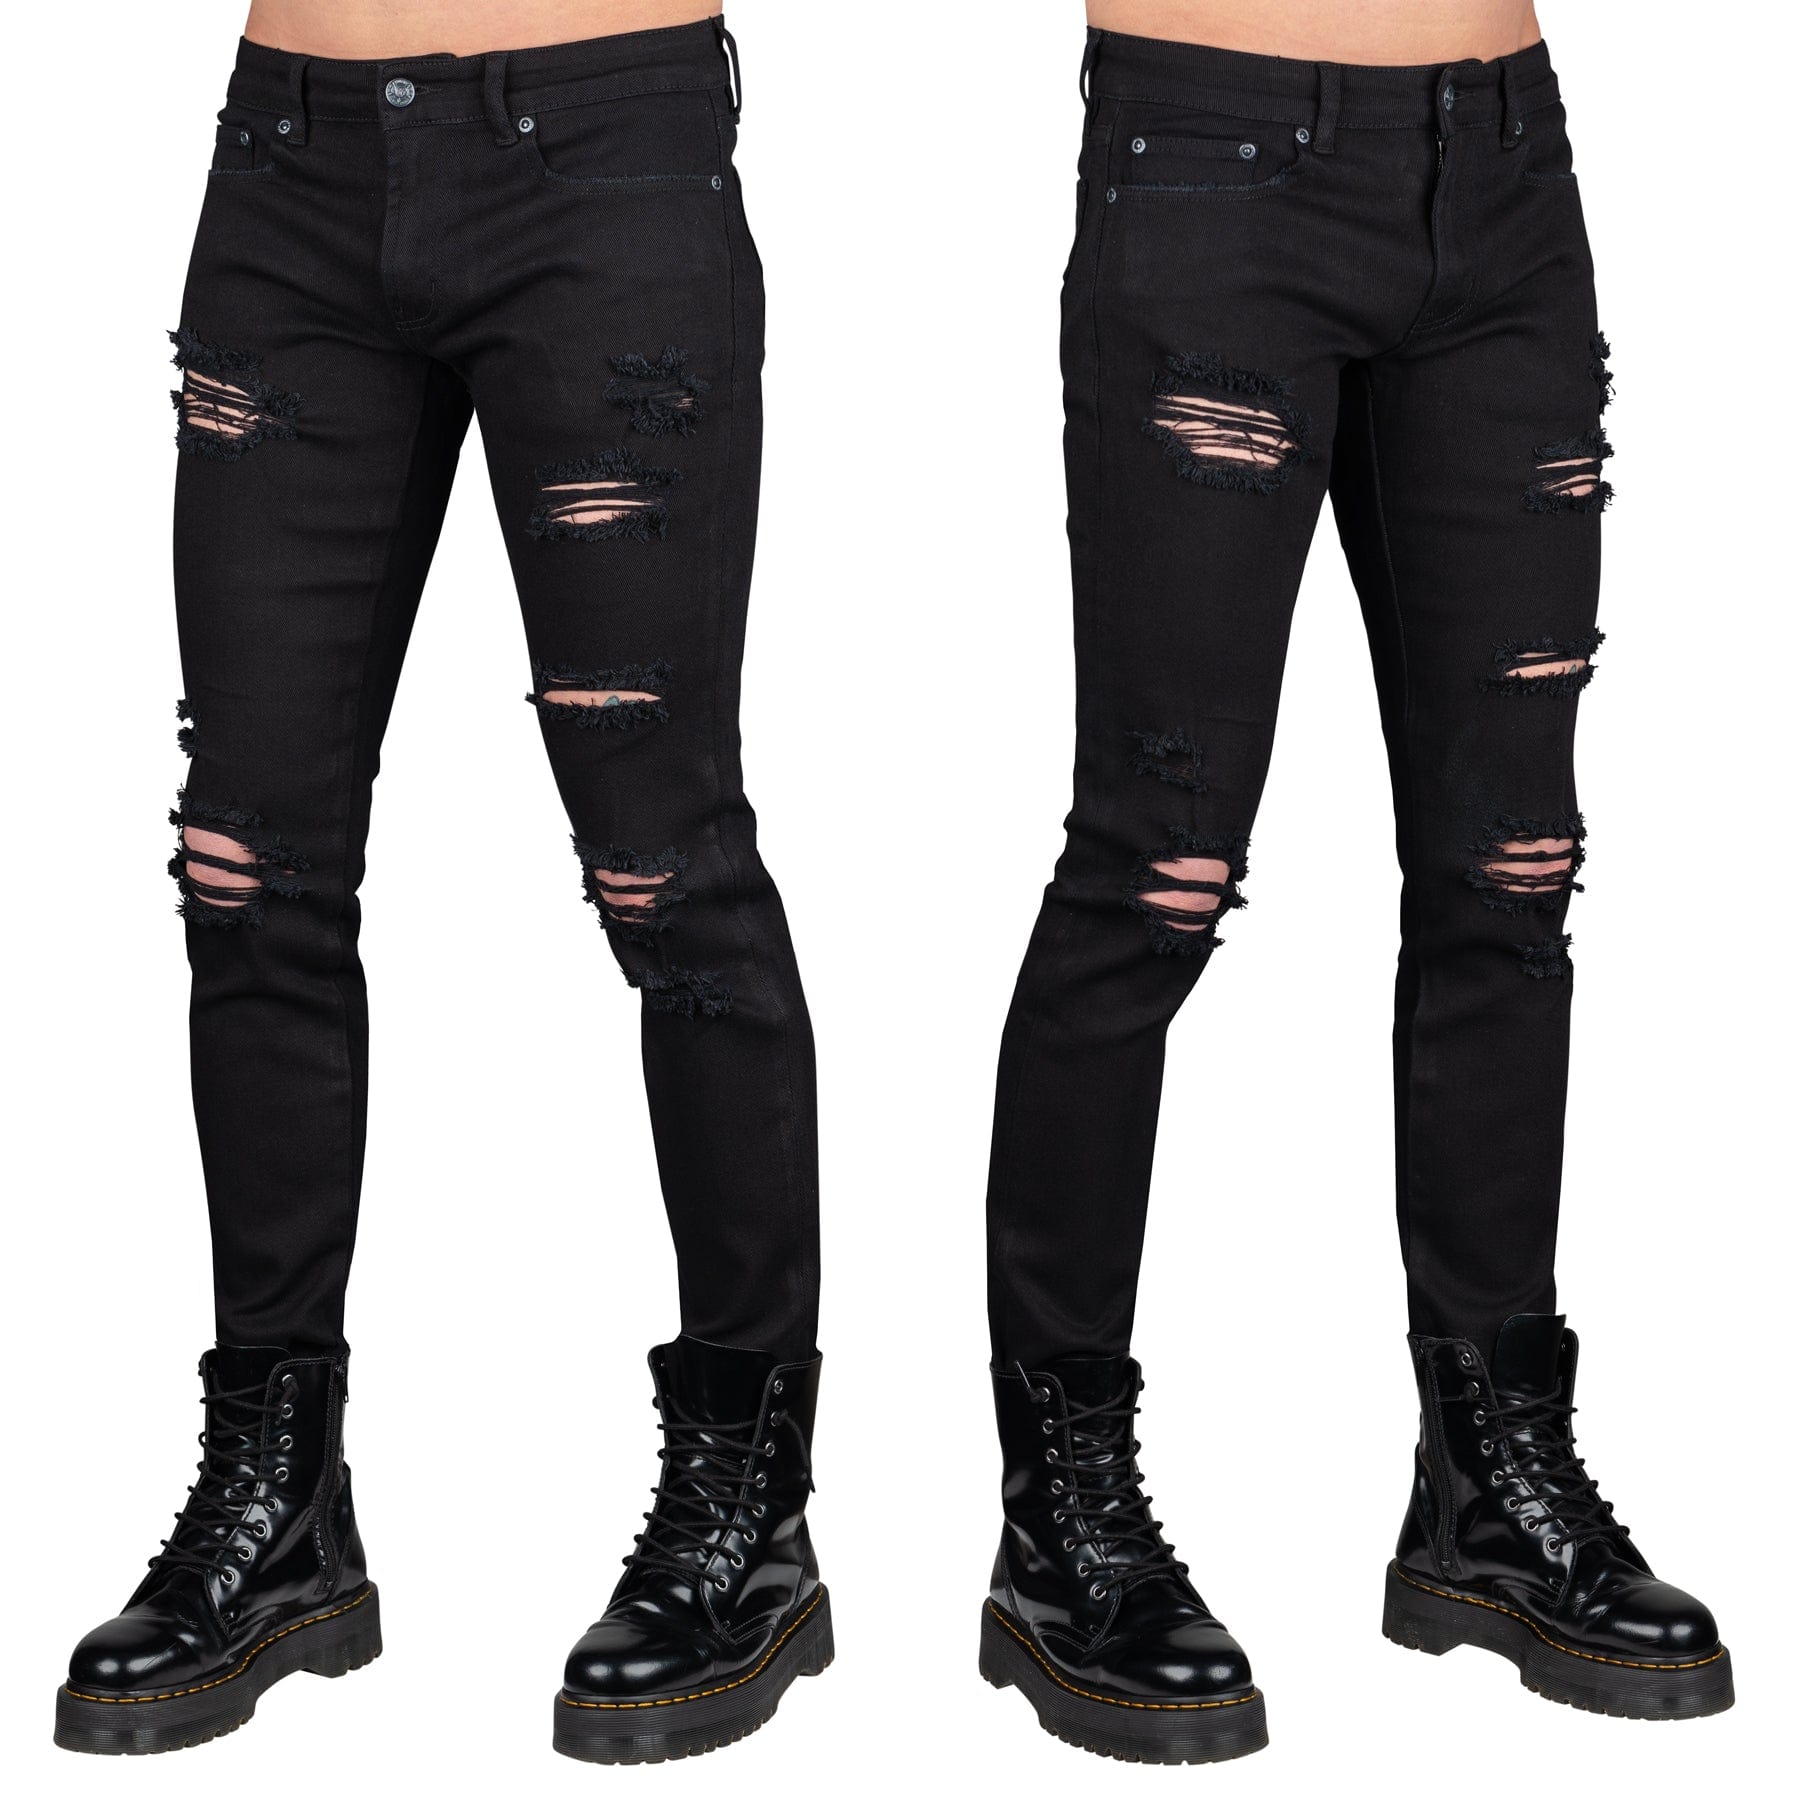 Wornstar Clothing Mens Jeans. Rampager Shredded Denim Jeans - Black